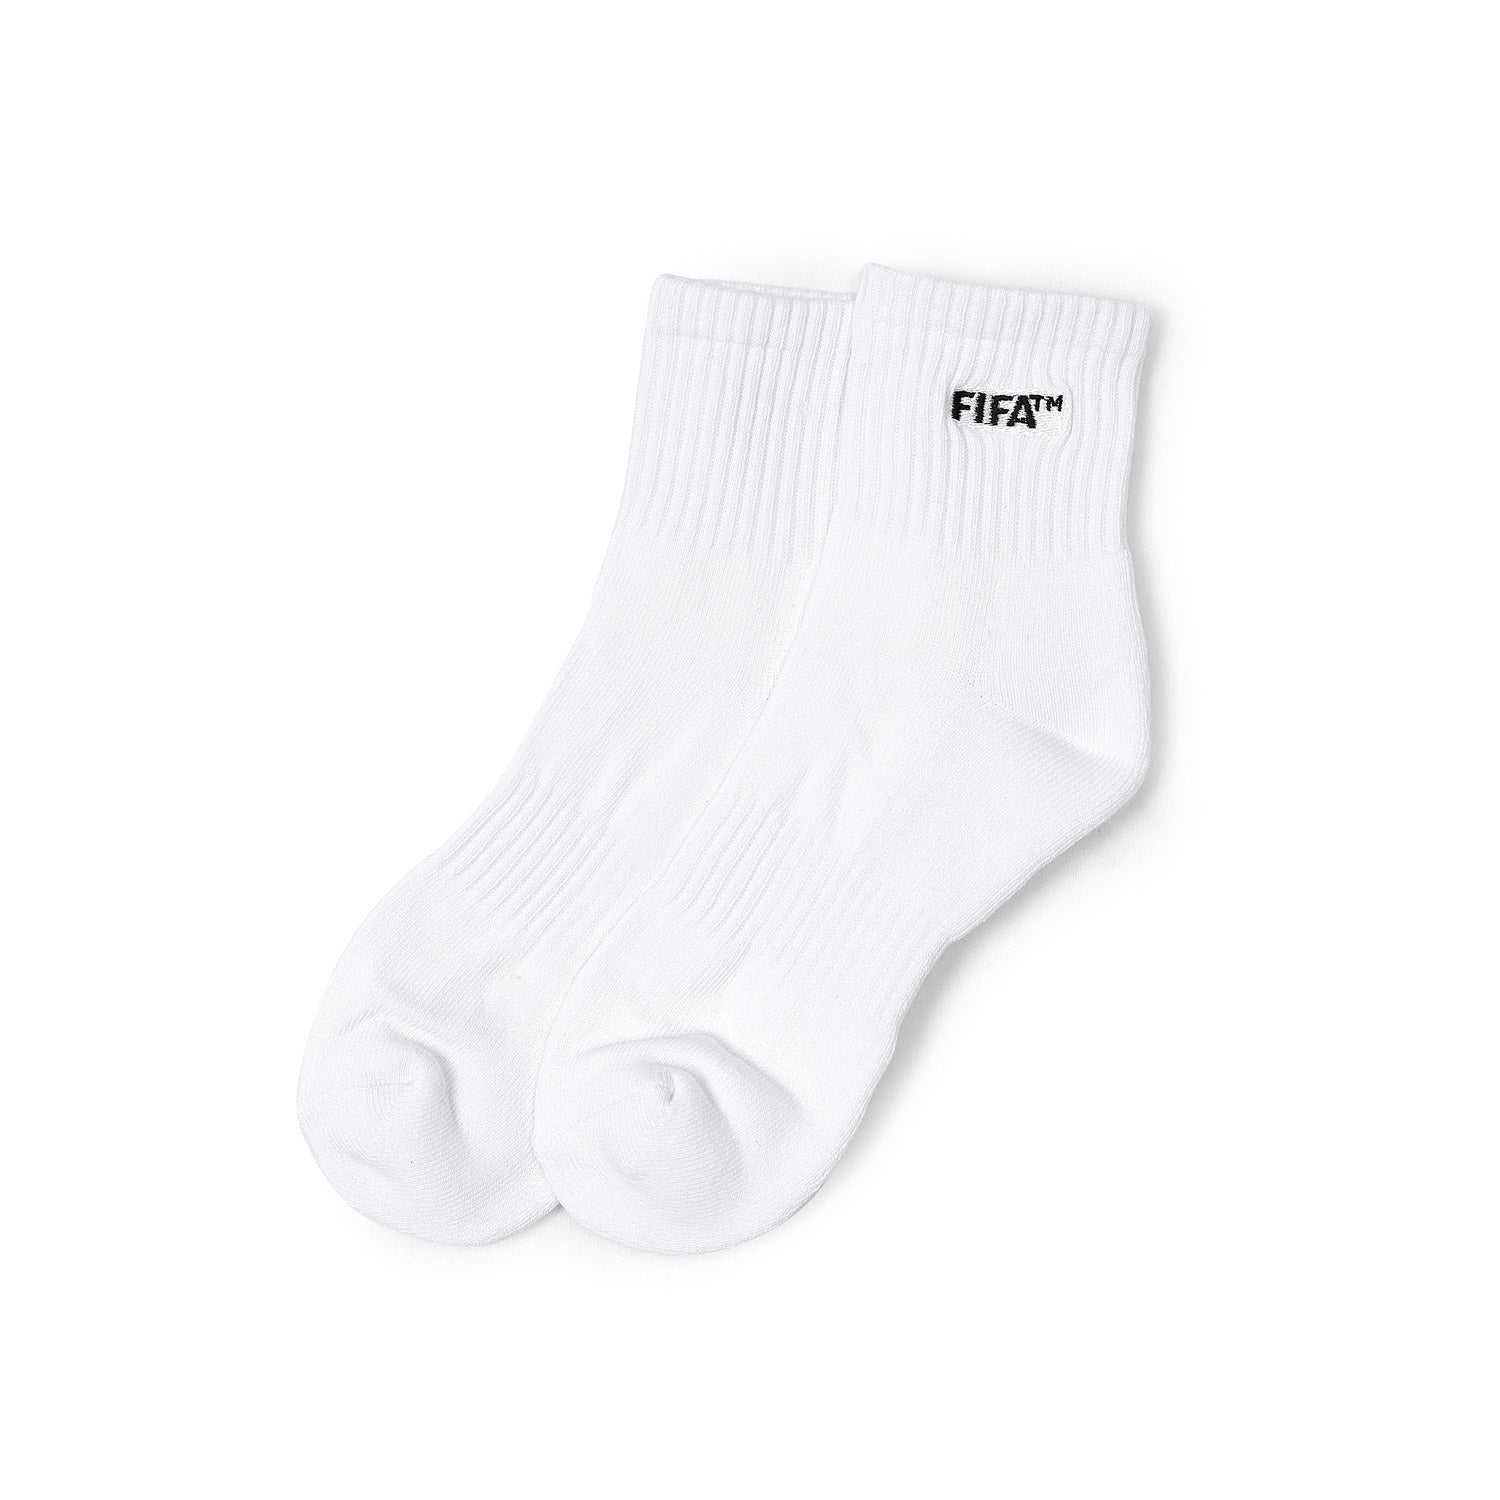 FIFA Essentials White Ankle Socks - Mens